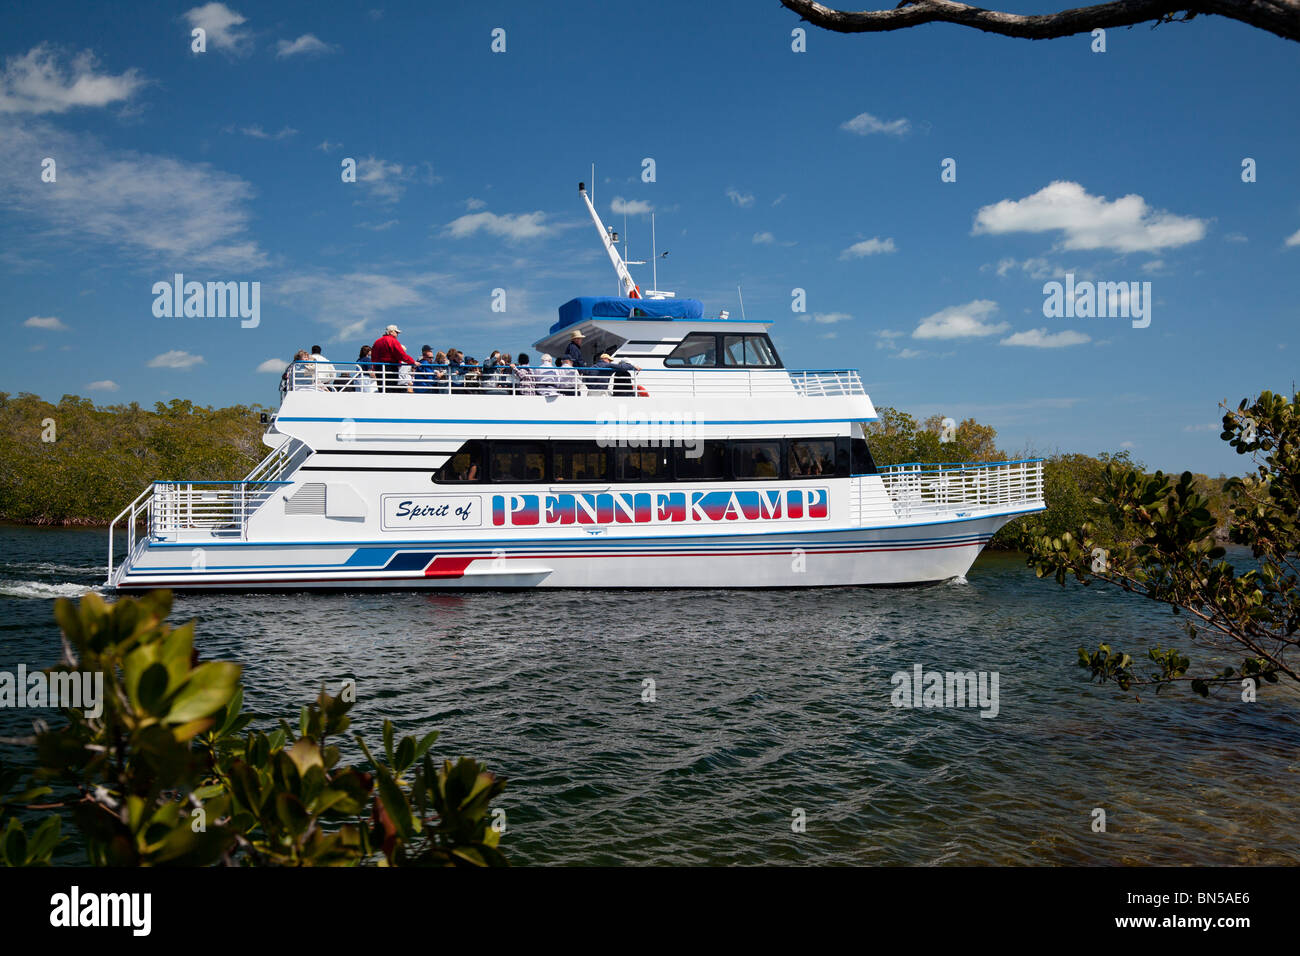 Boat trip taking tourists around the John Pennekamp State Park, Key Largo, Florida. Stock Photo